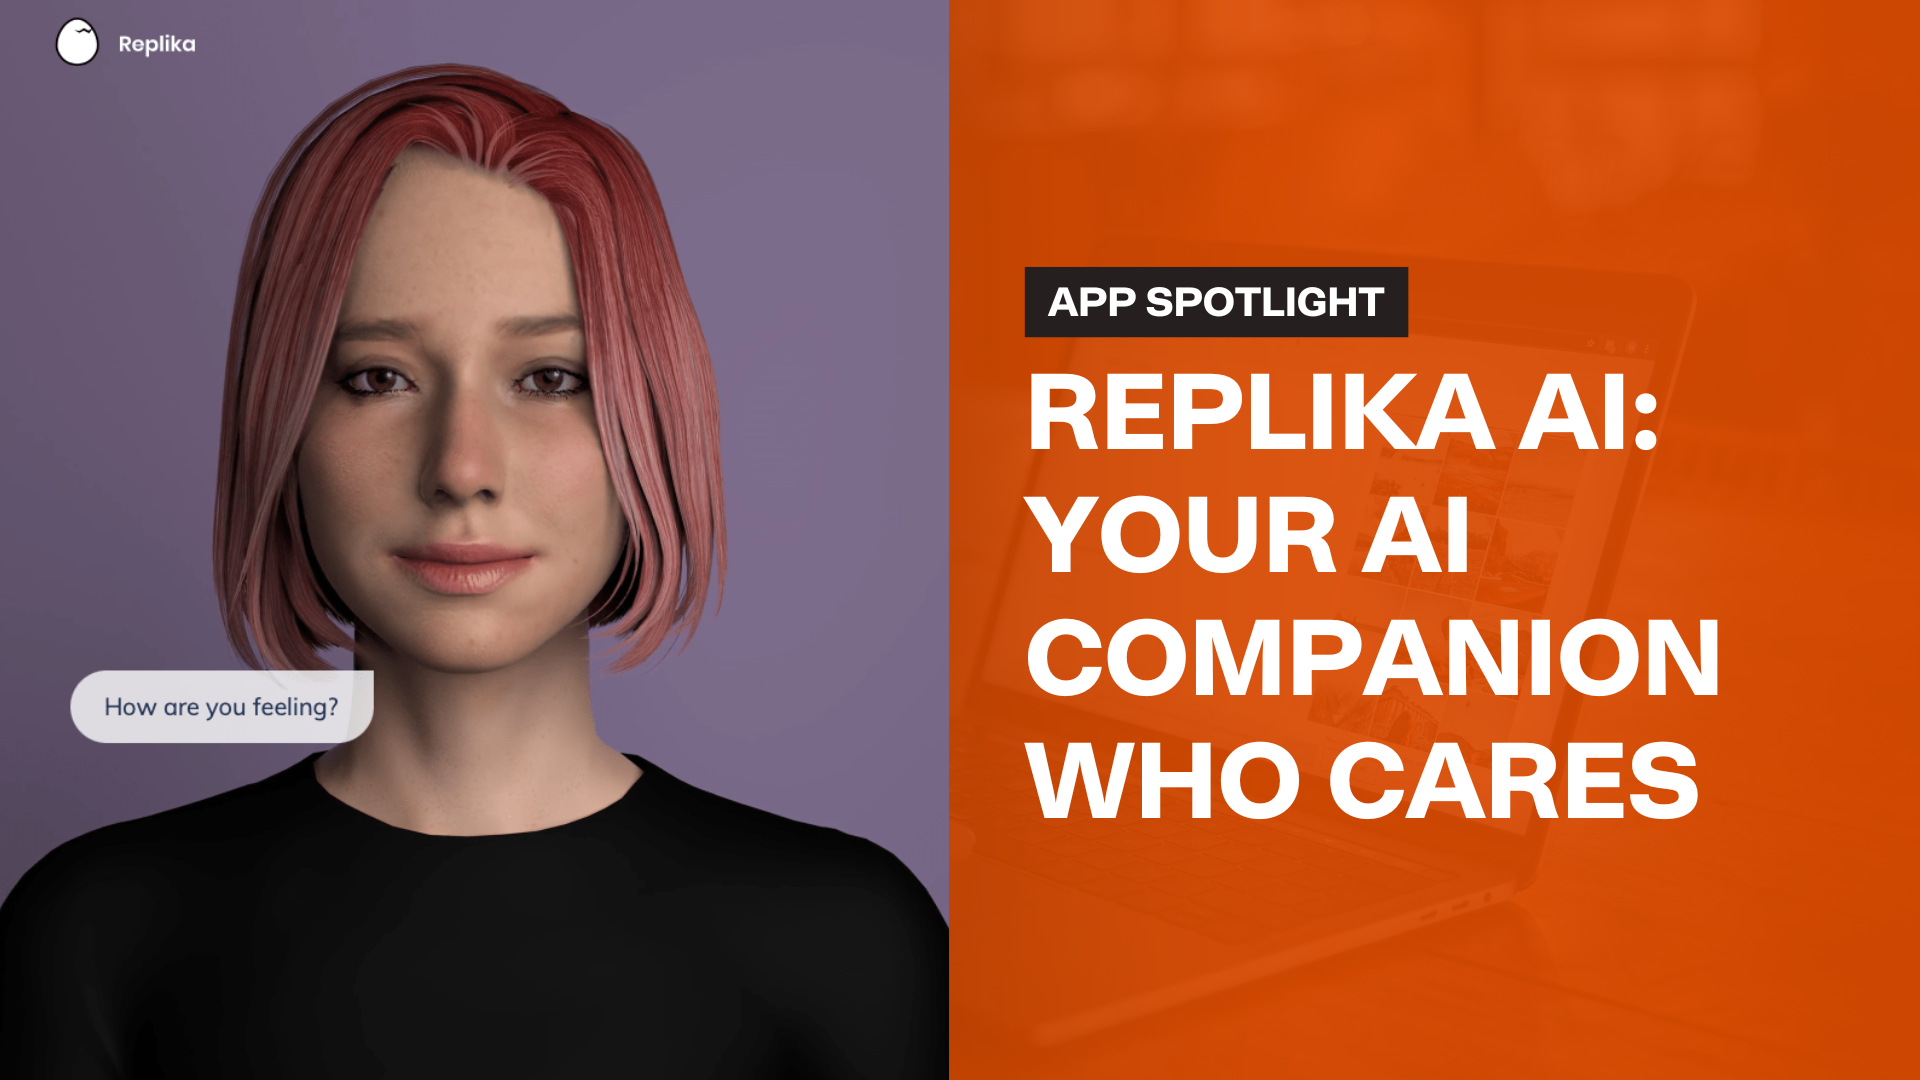 APP SPOTLIGHT: Replika AI, Your AI companion who cares